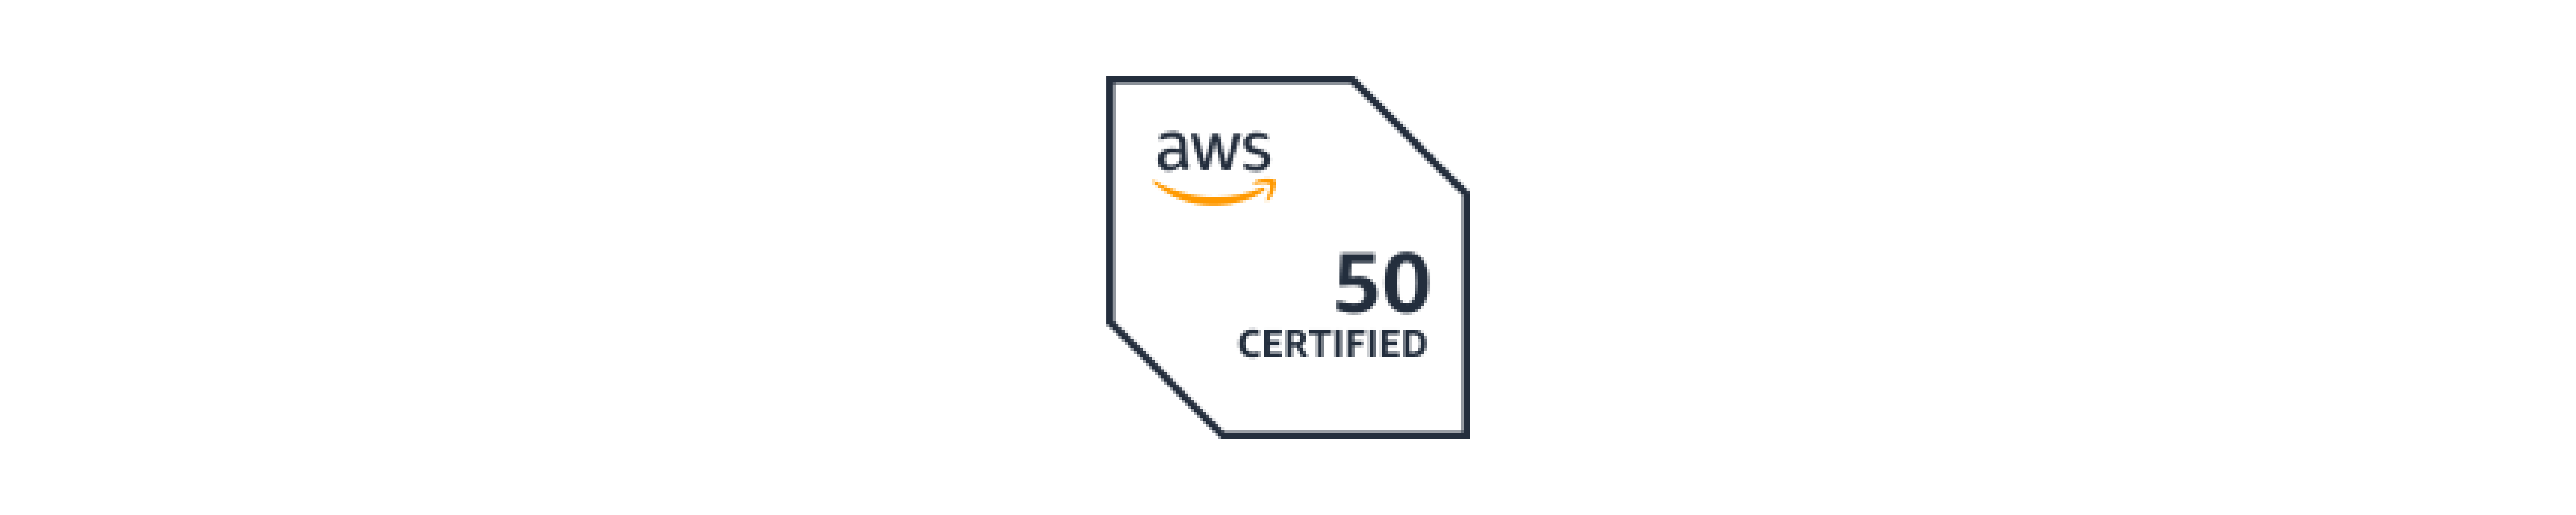 aws50 certified web